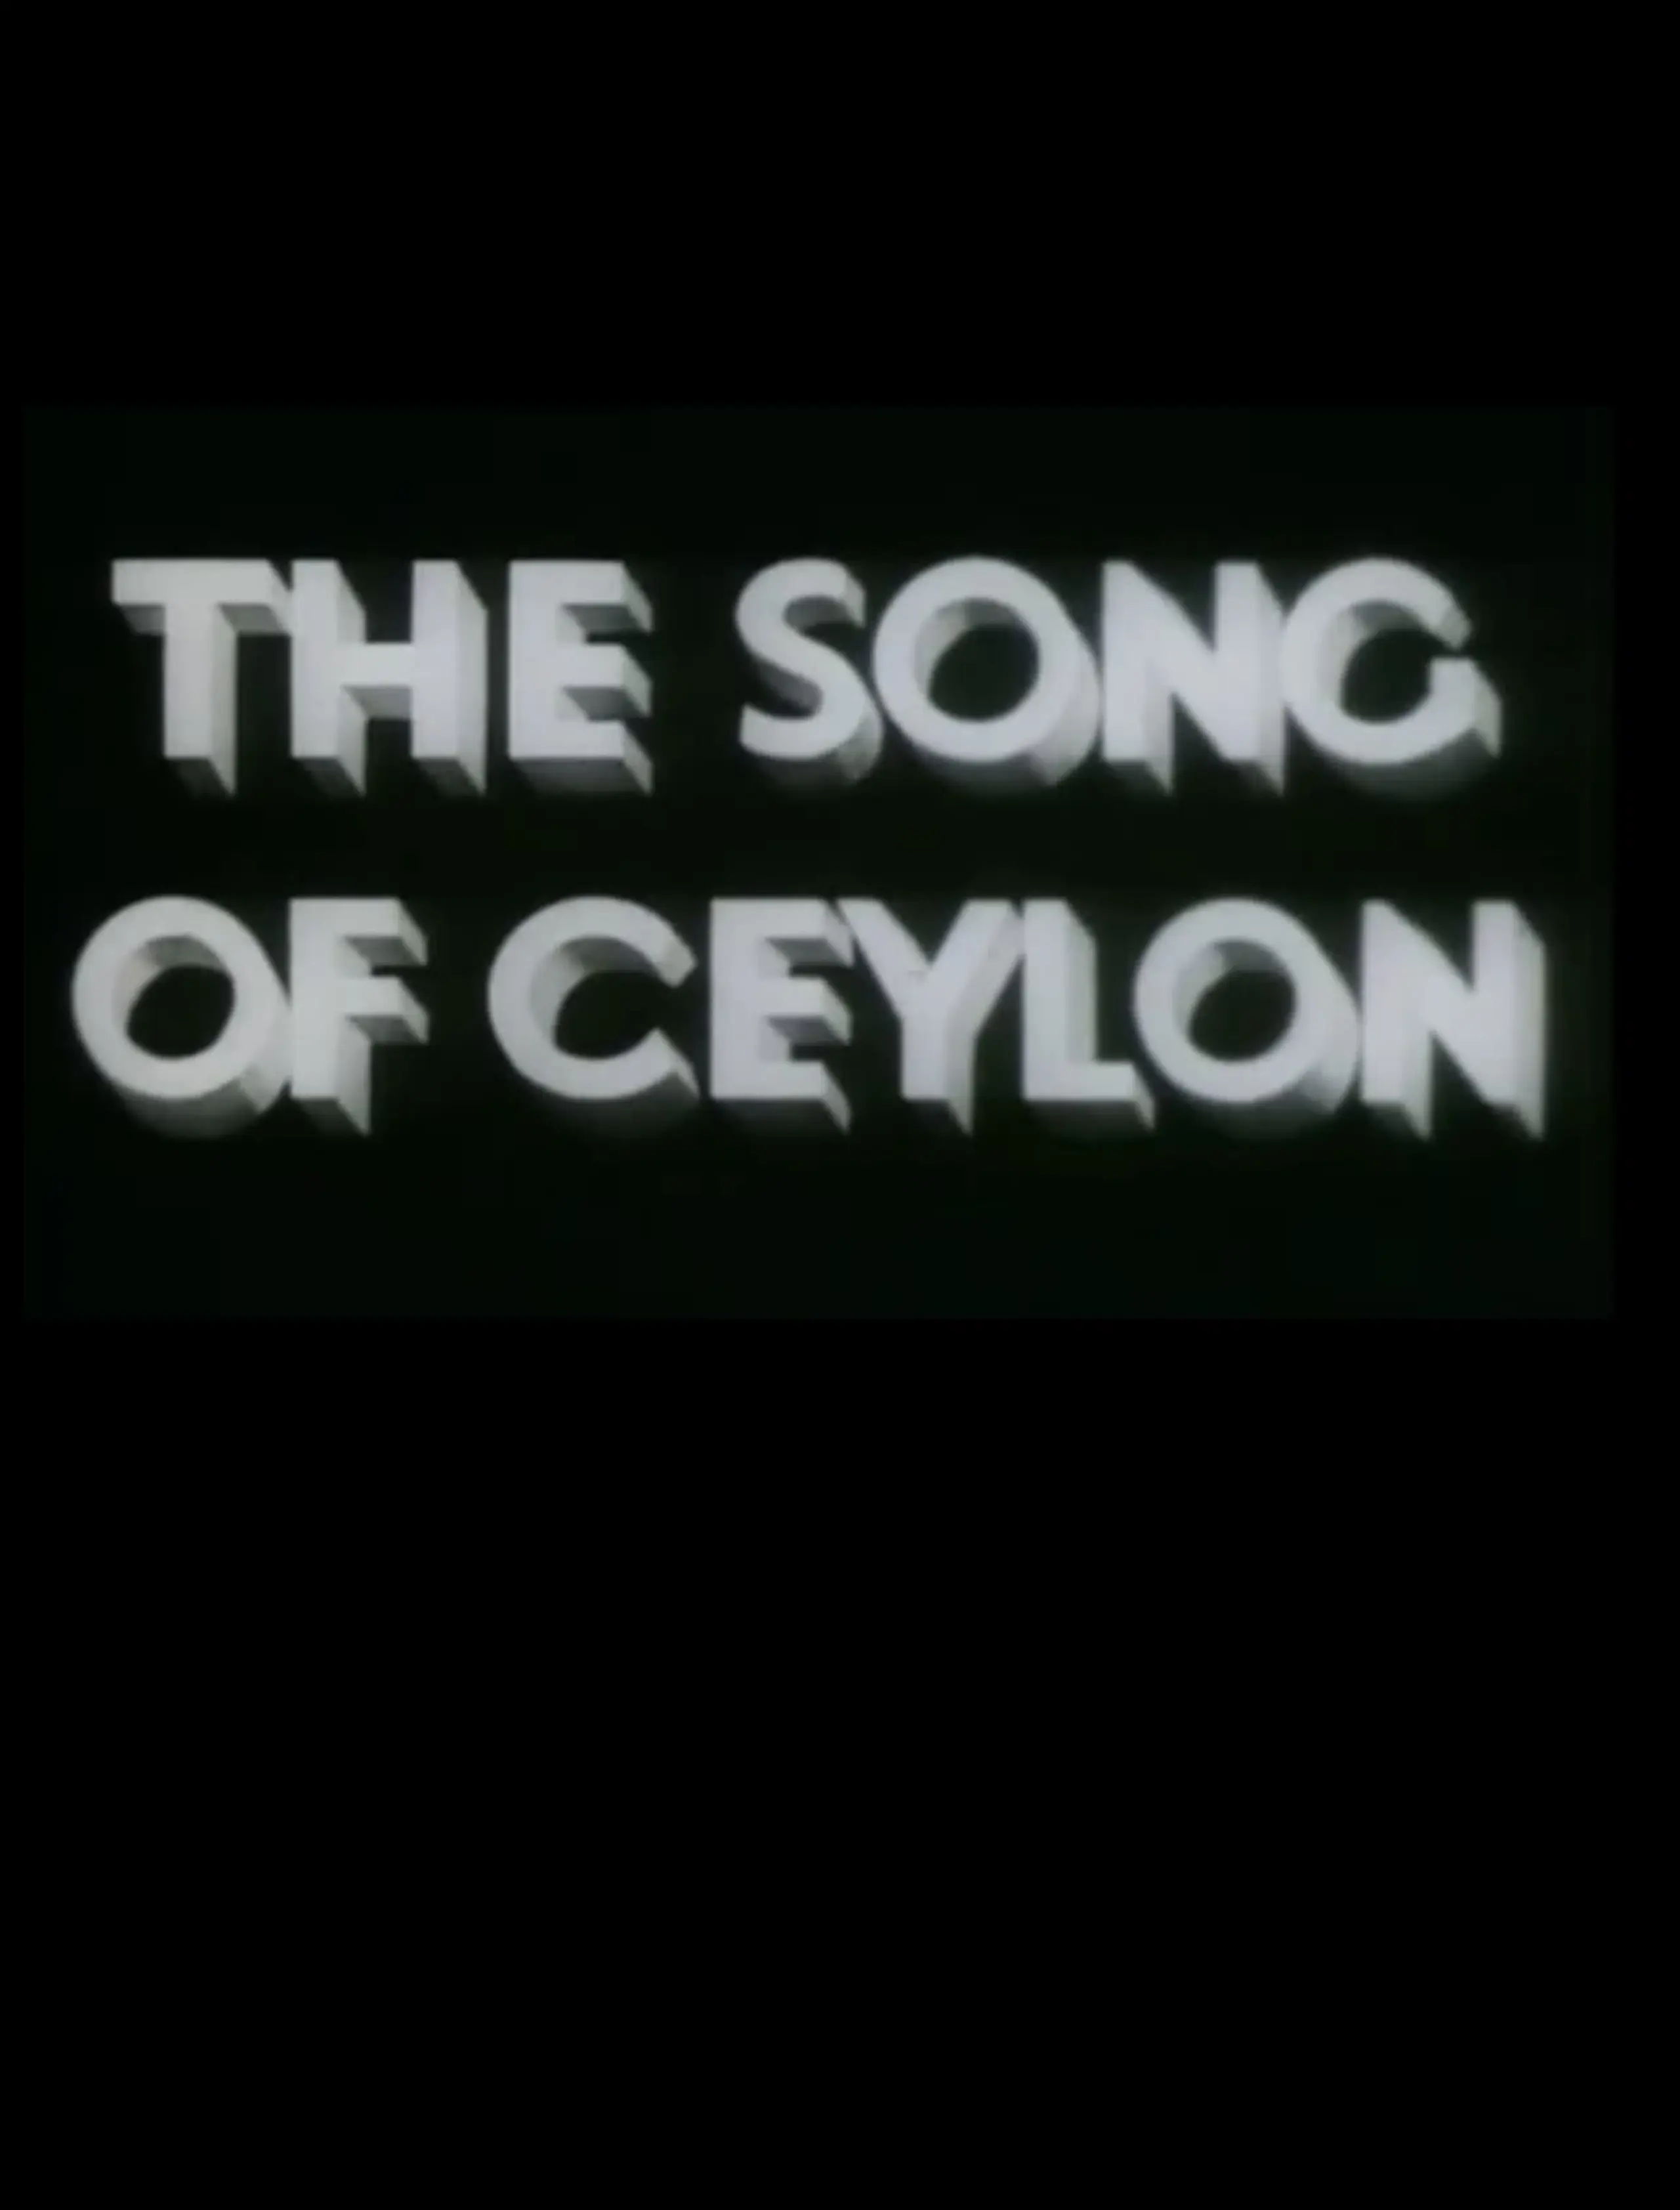 The Song of Ceylon